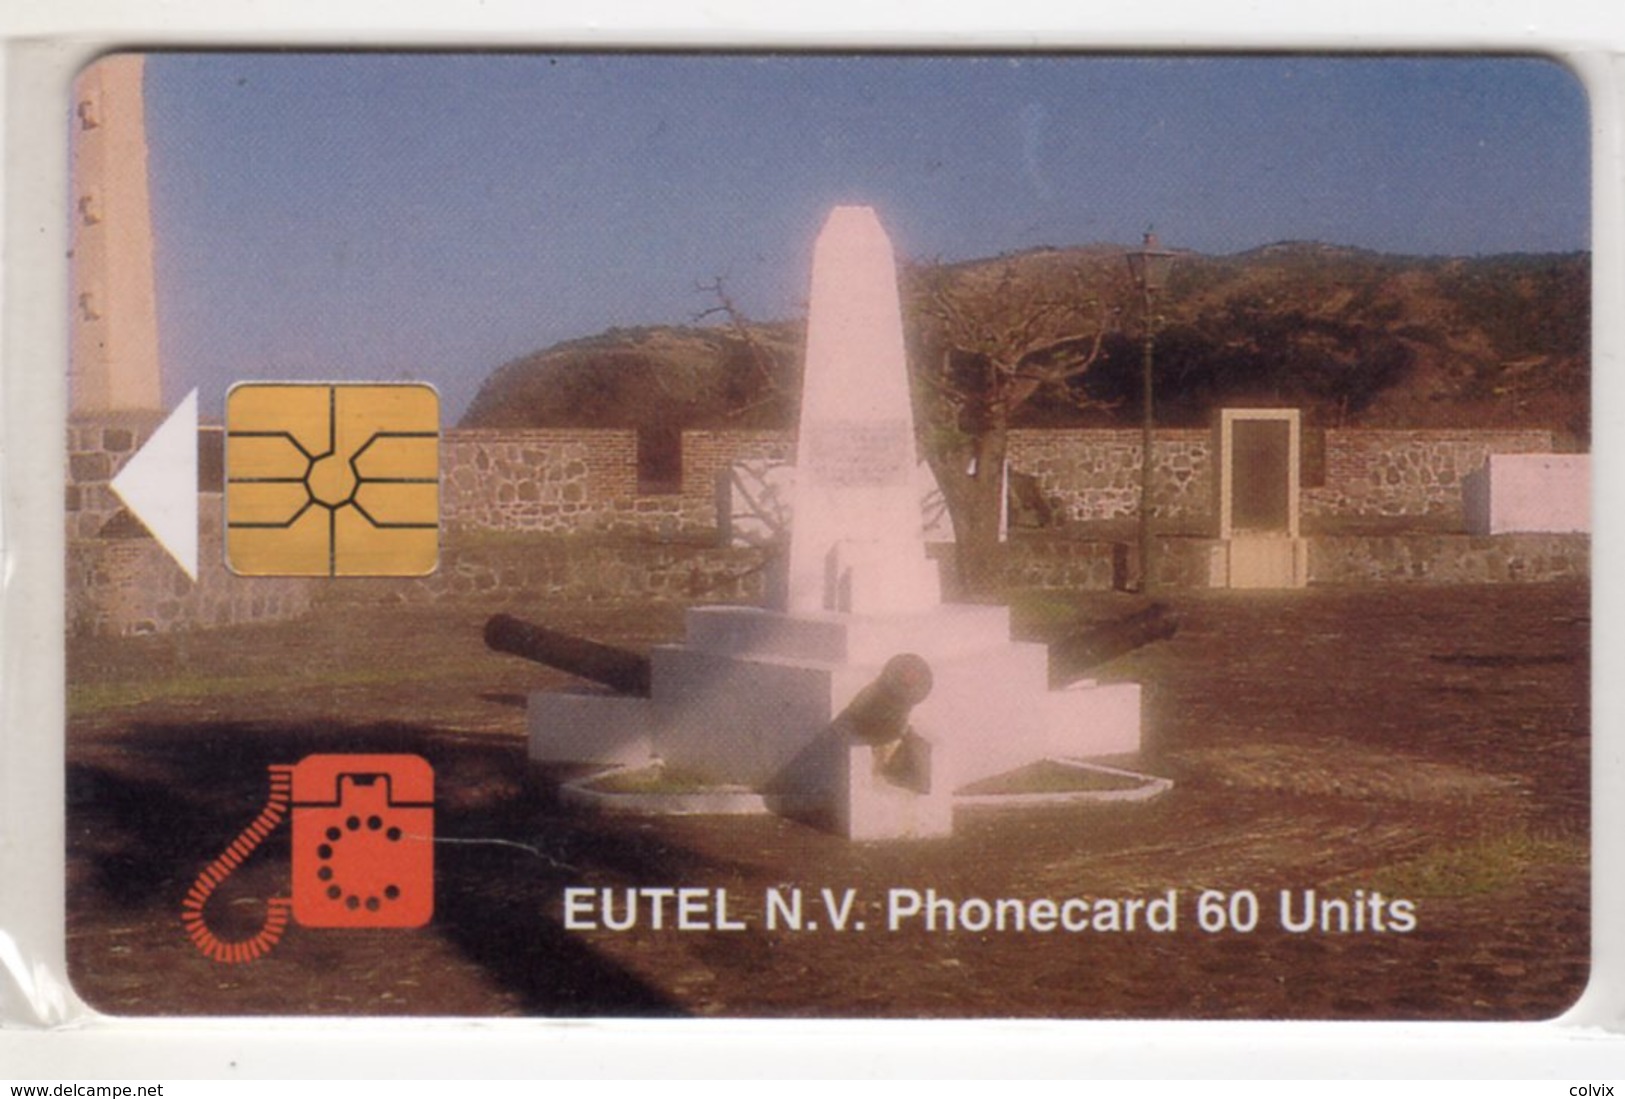 ANTILLES NEERLANDAISES SAINT EUSTACHE REF MV CARDS STAT-C1  ORANGE FORT 2000 Ex - Antilles (Netherlands)